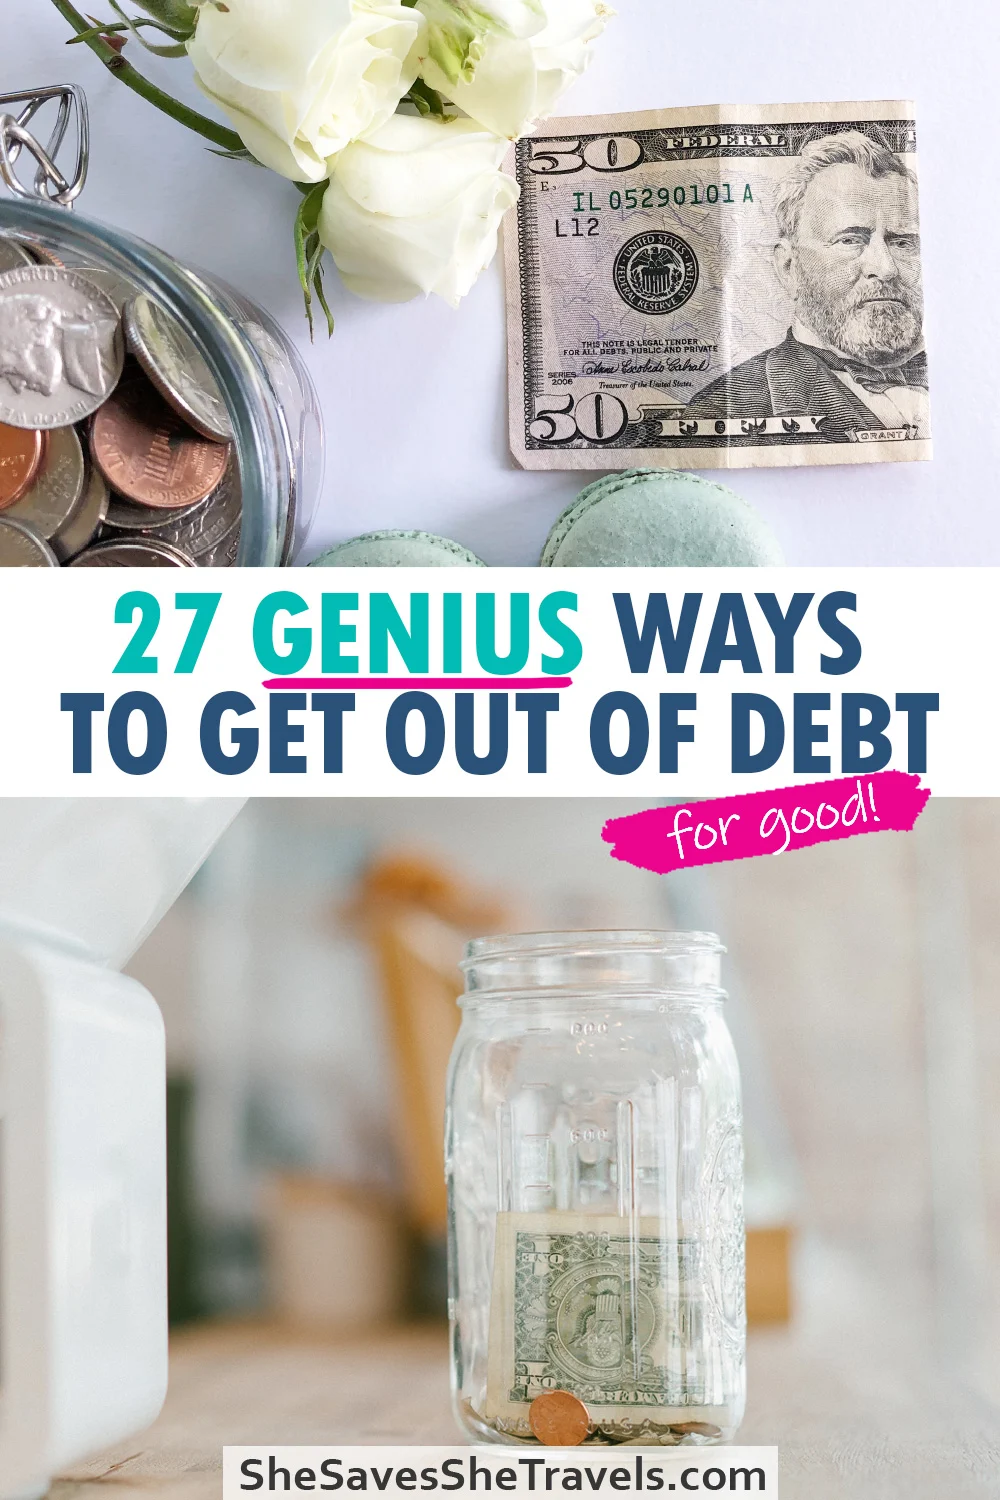 27 genius ways to get out of debt